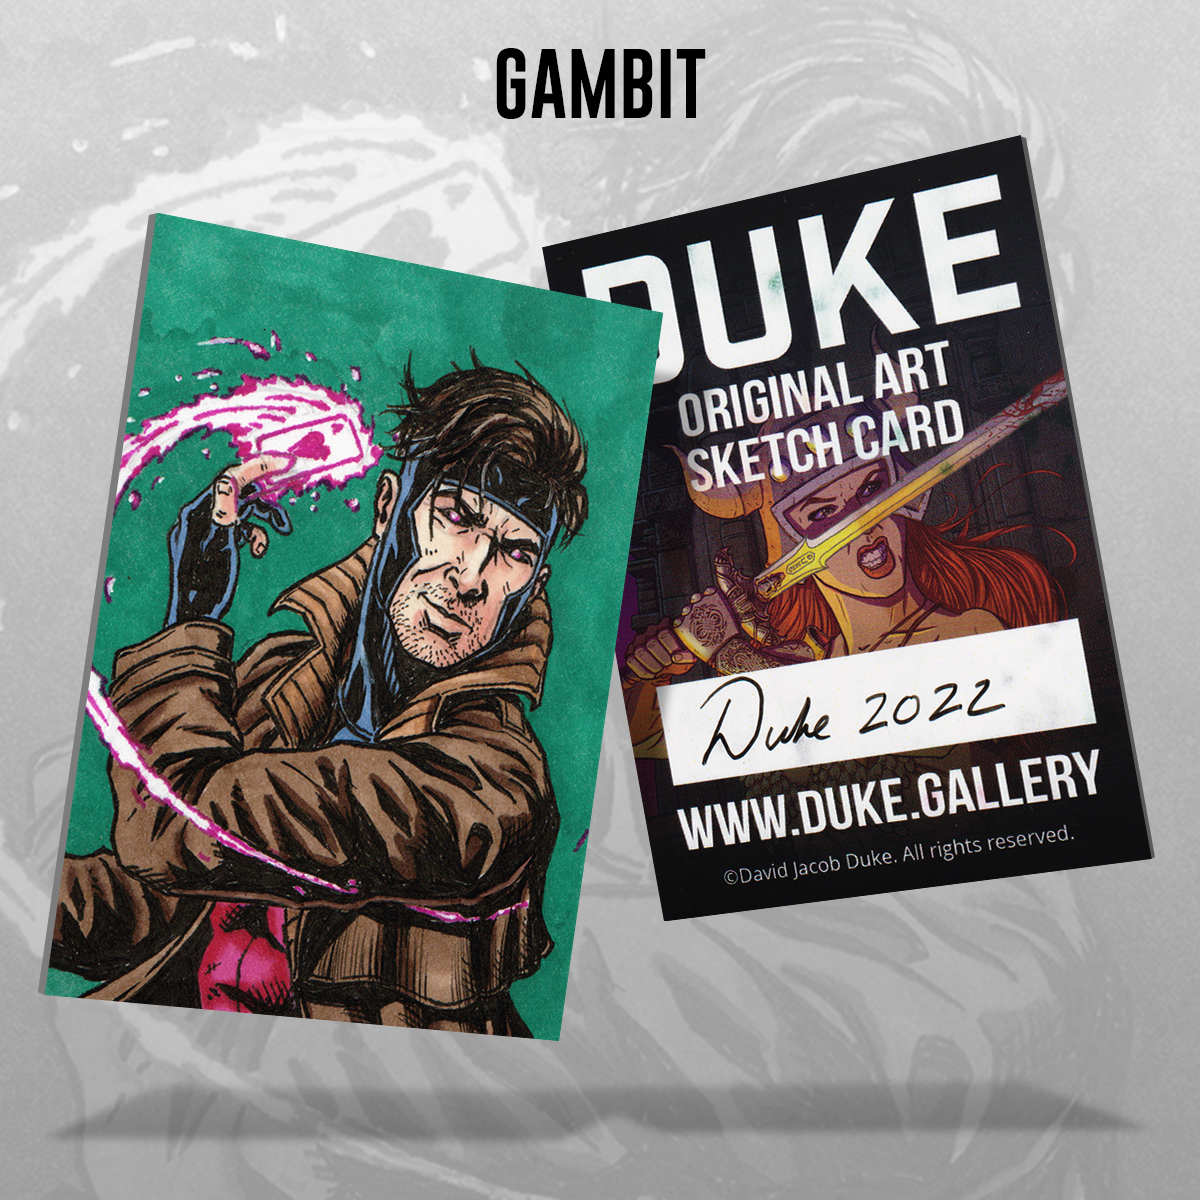 Gambit Sketch Card by Duke